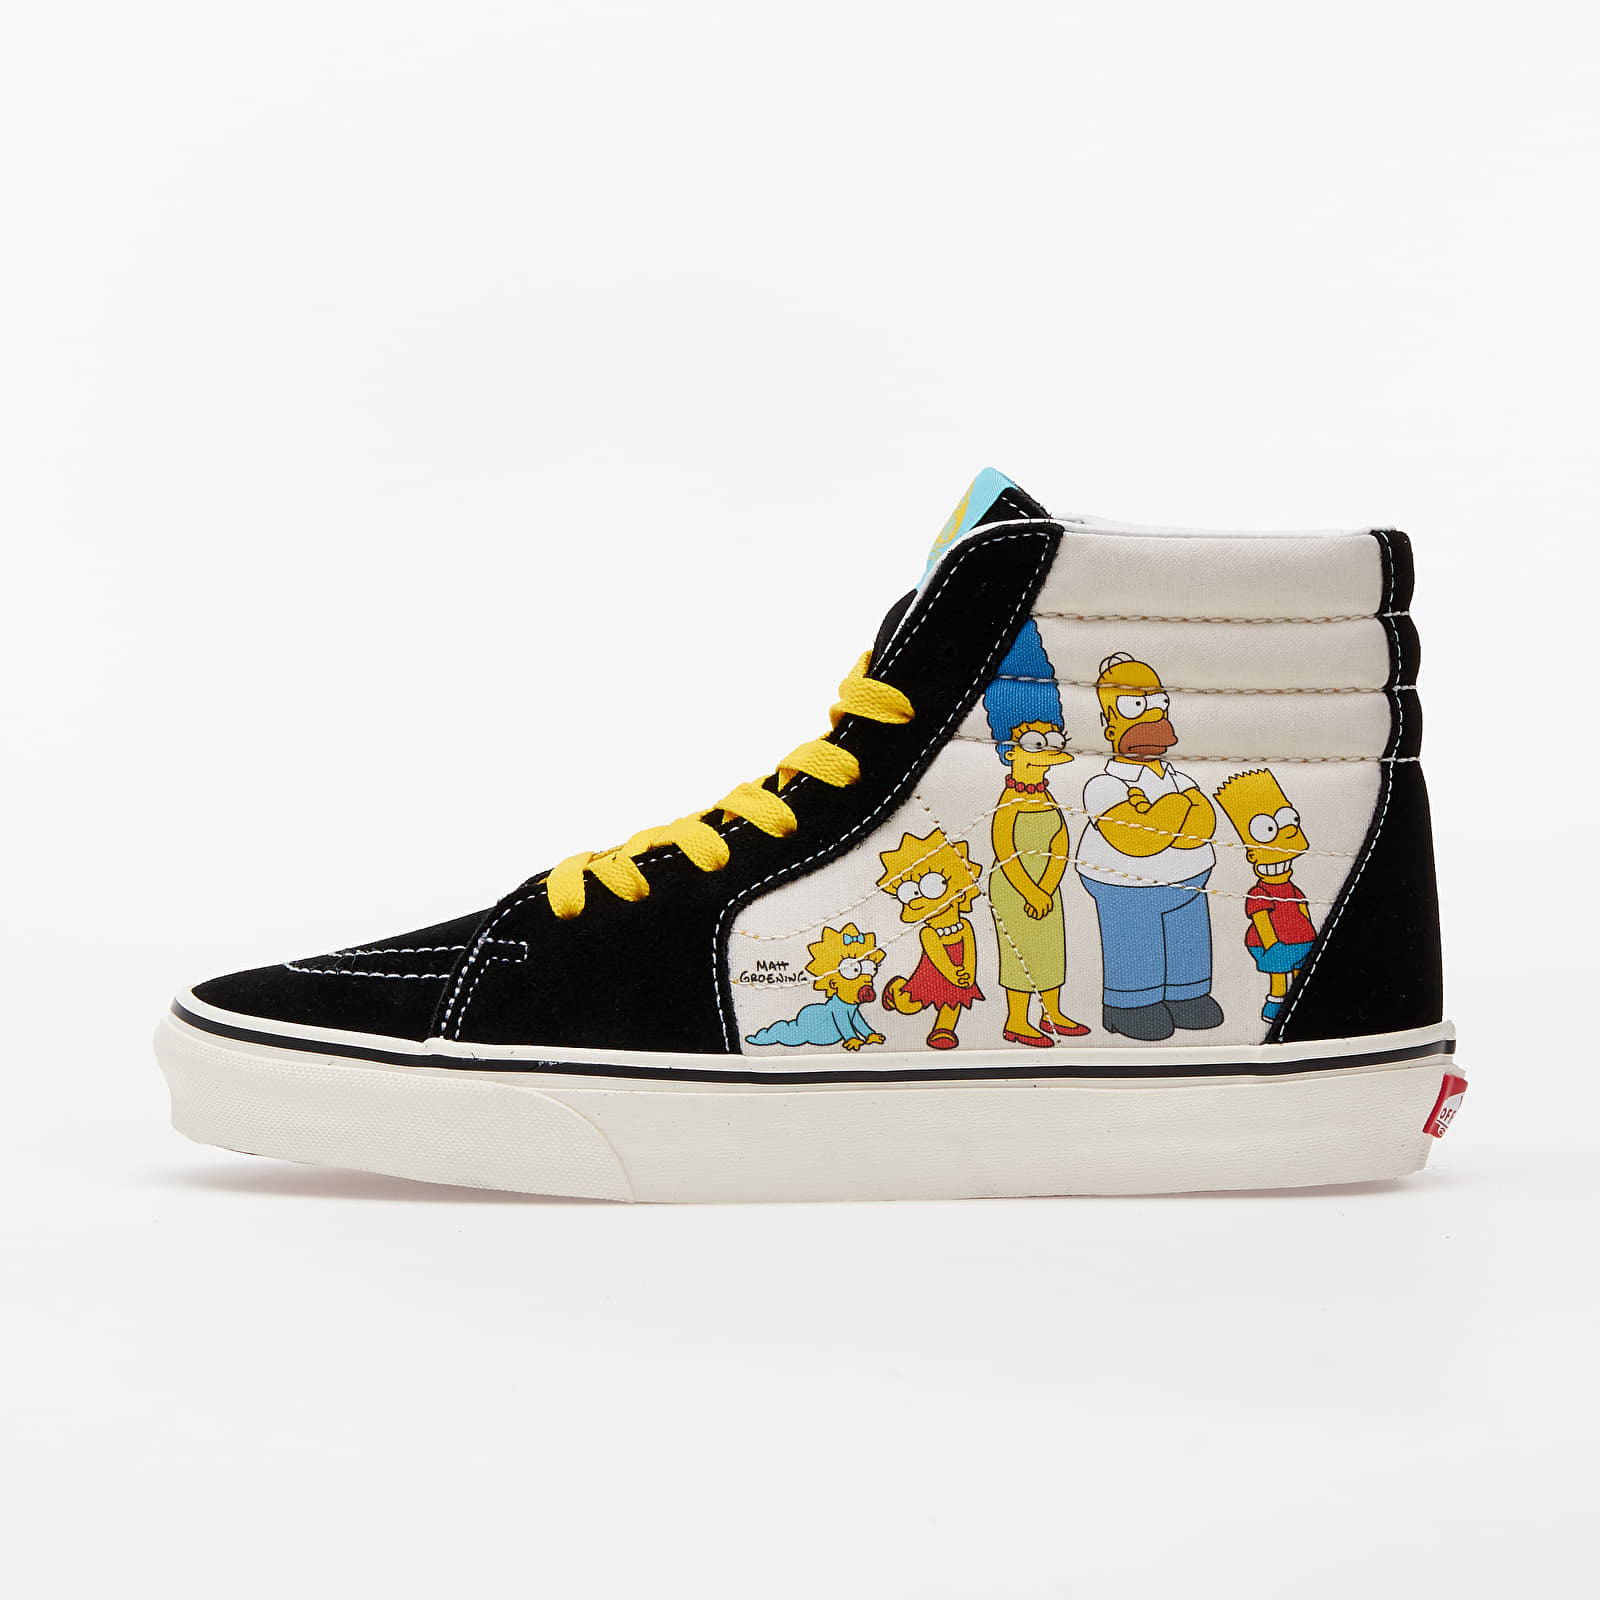 Men's shoes Vans Sk8-Hi (The Simpsons) 1987-2020